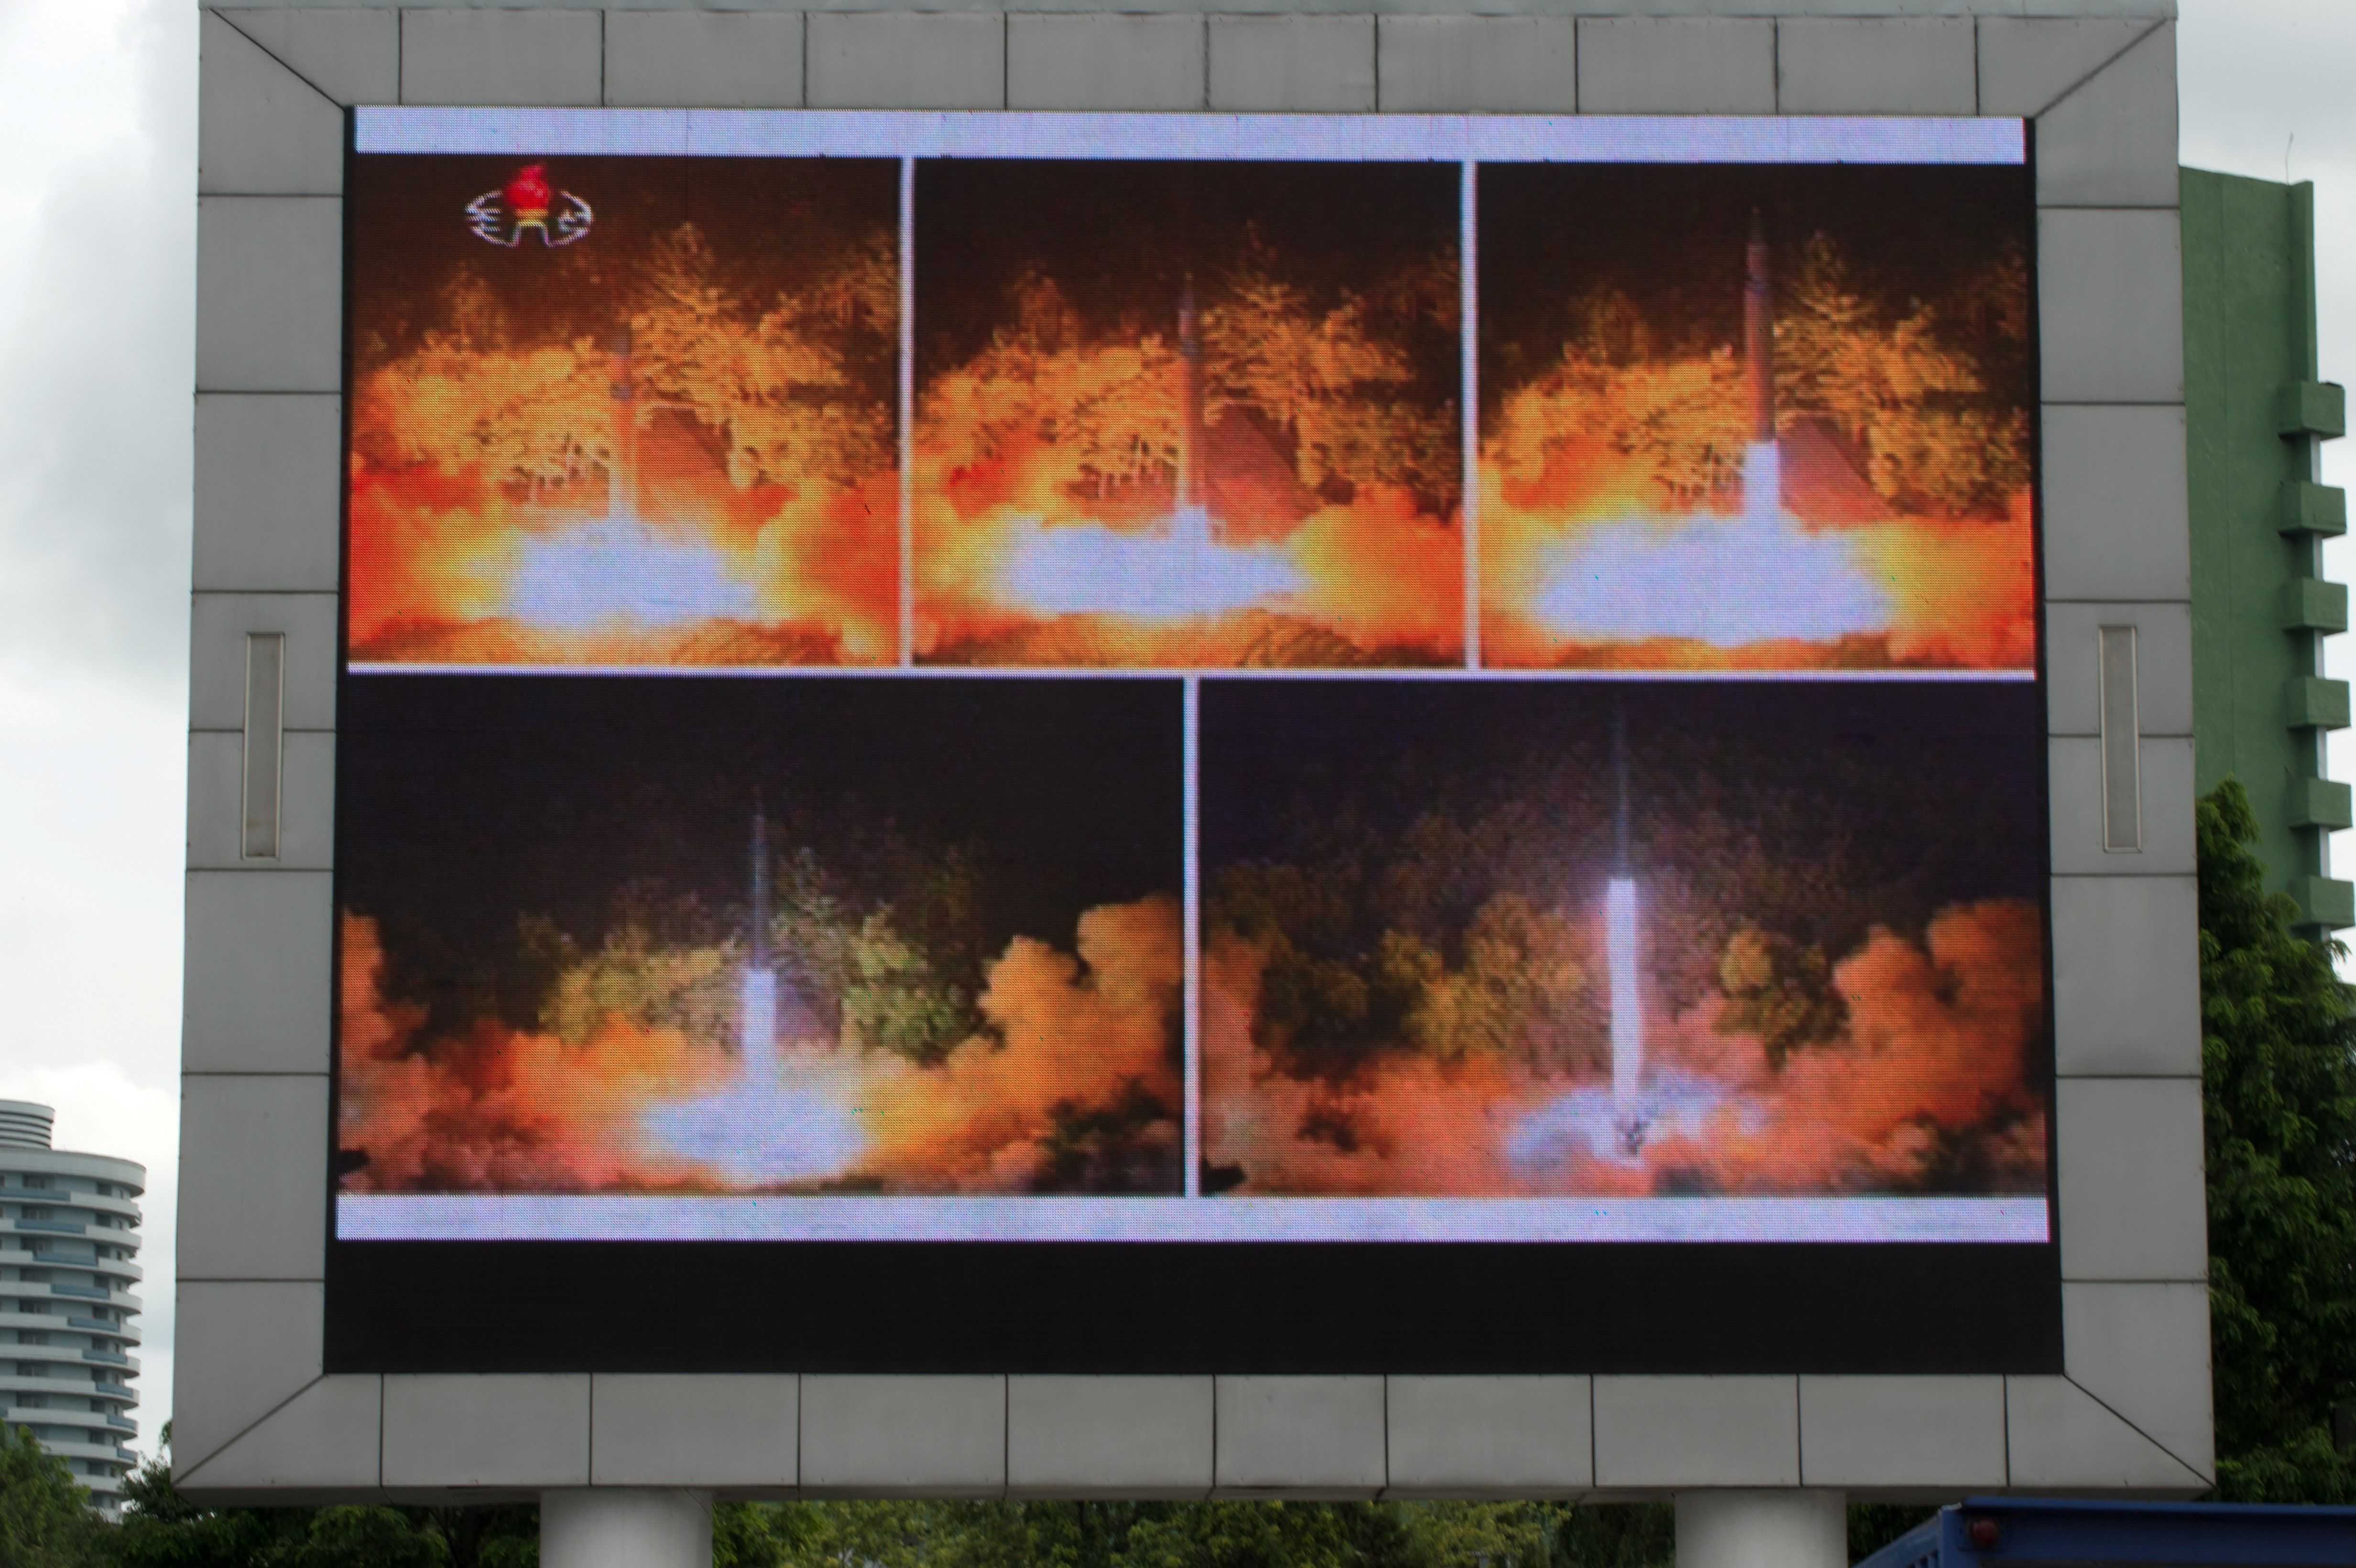 An ICBM test on TV in Pyongyang